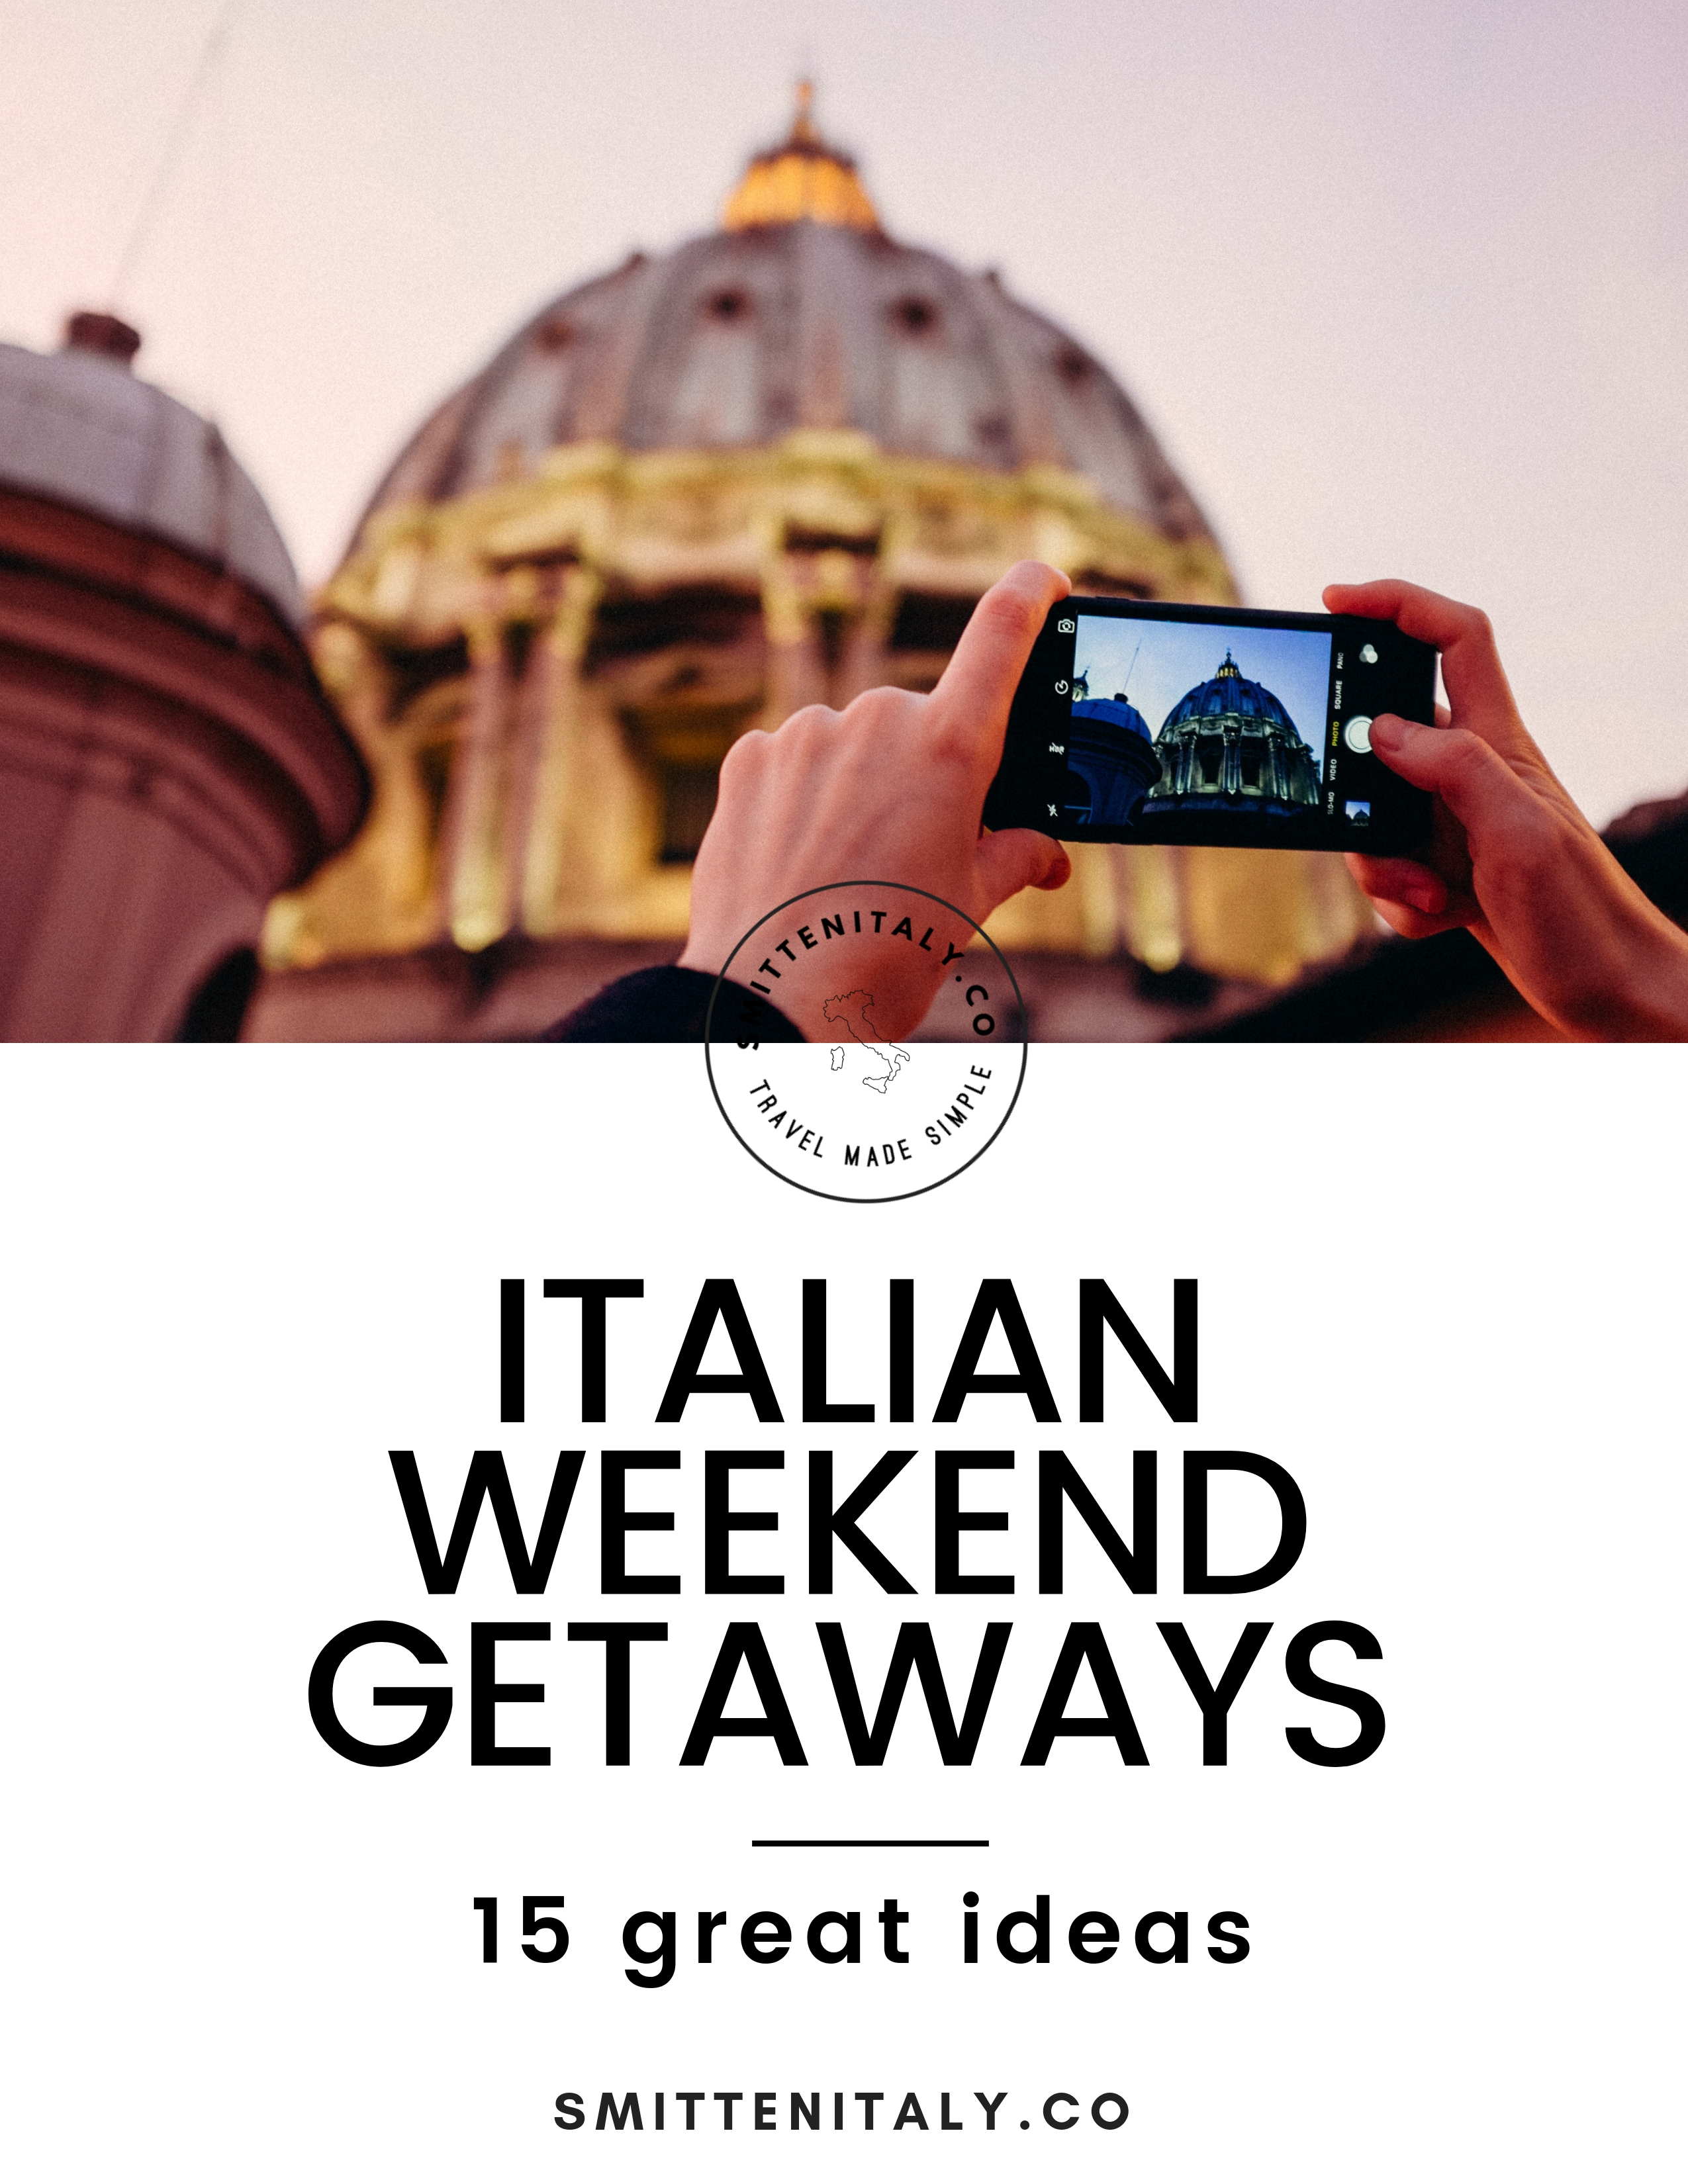 Italian Weekend Getaways (15 great ideas)